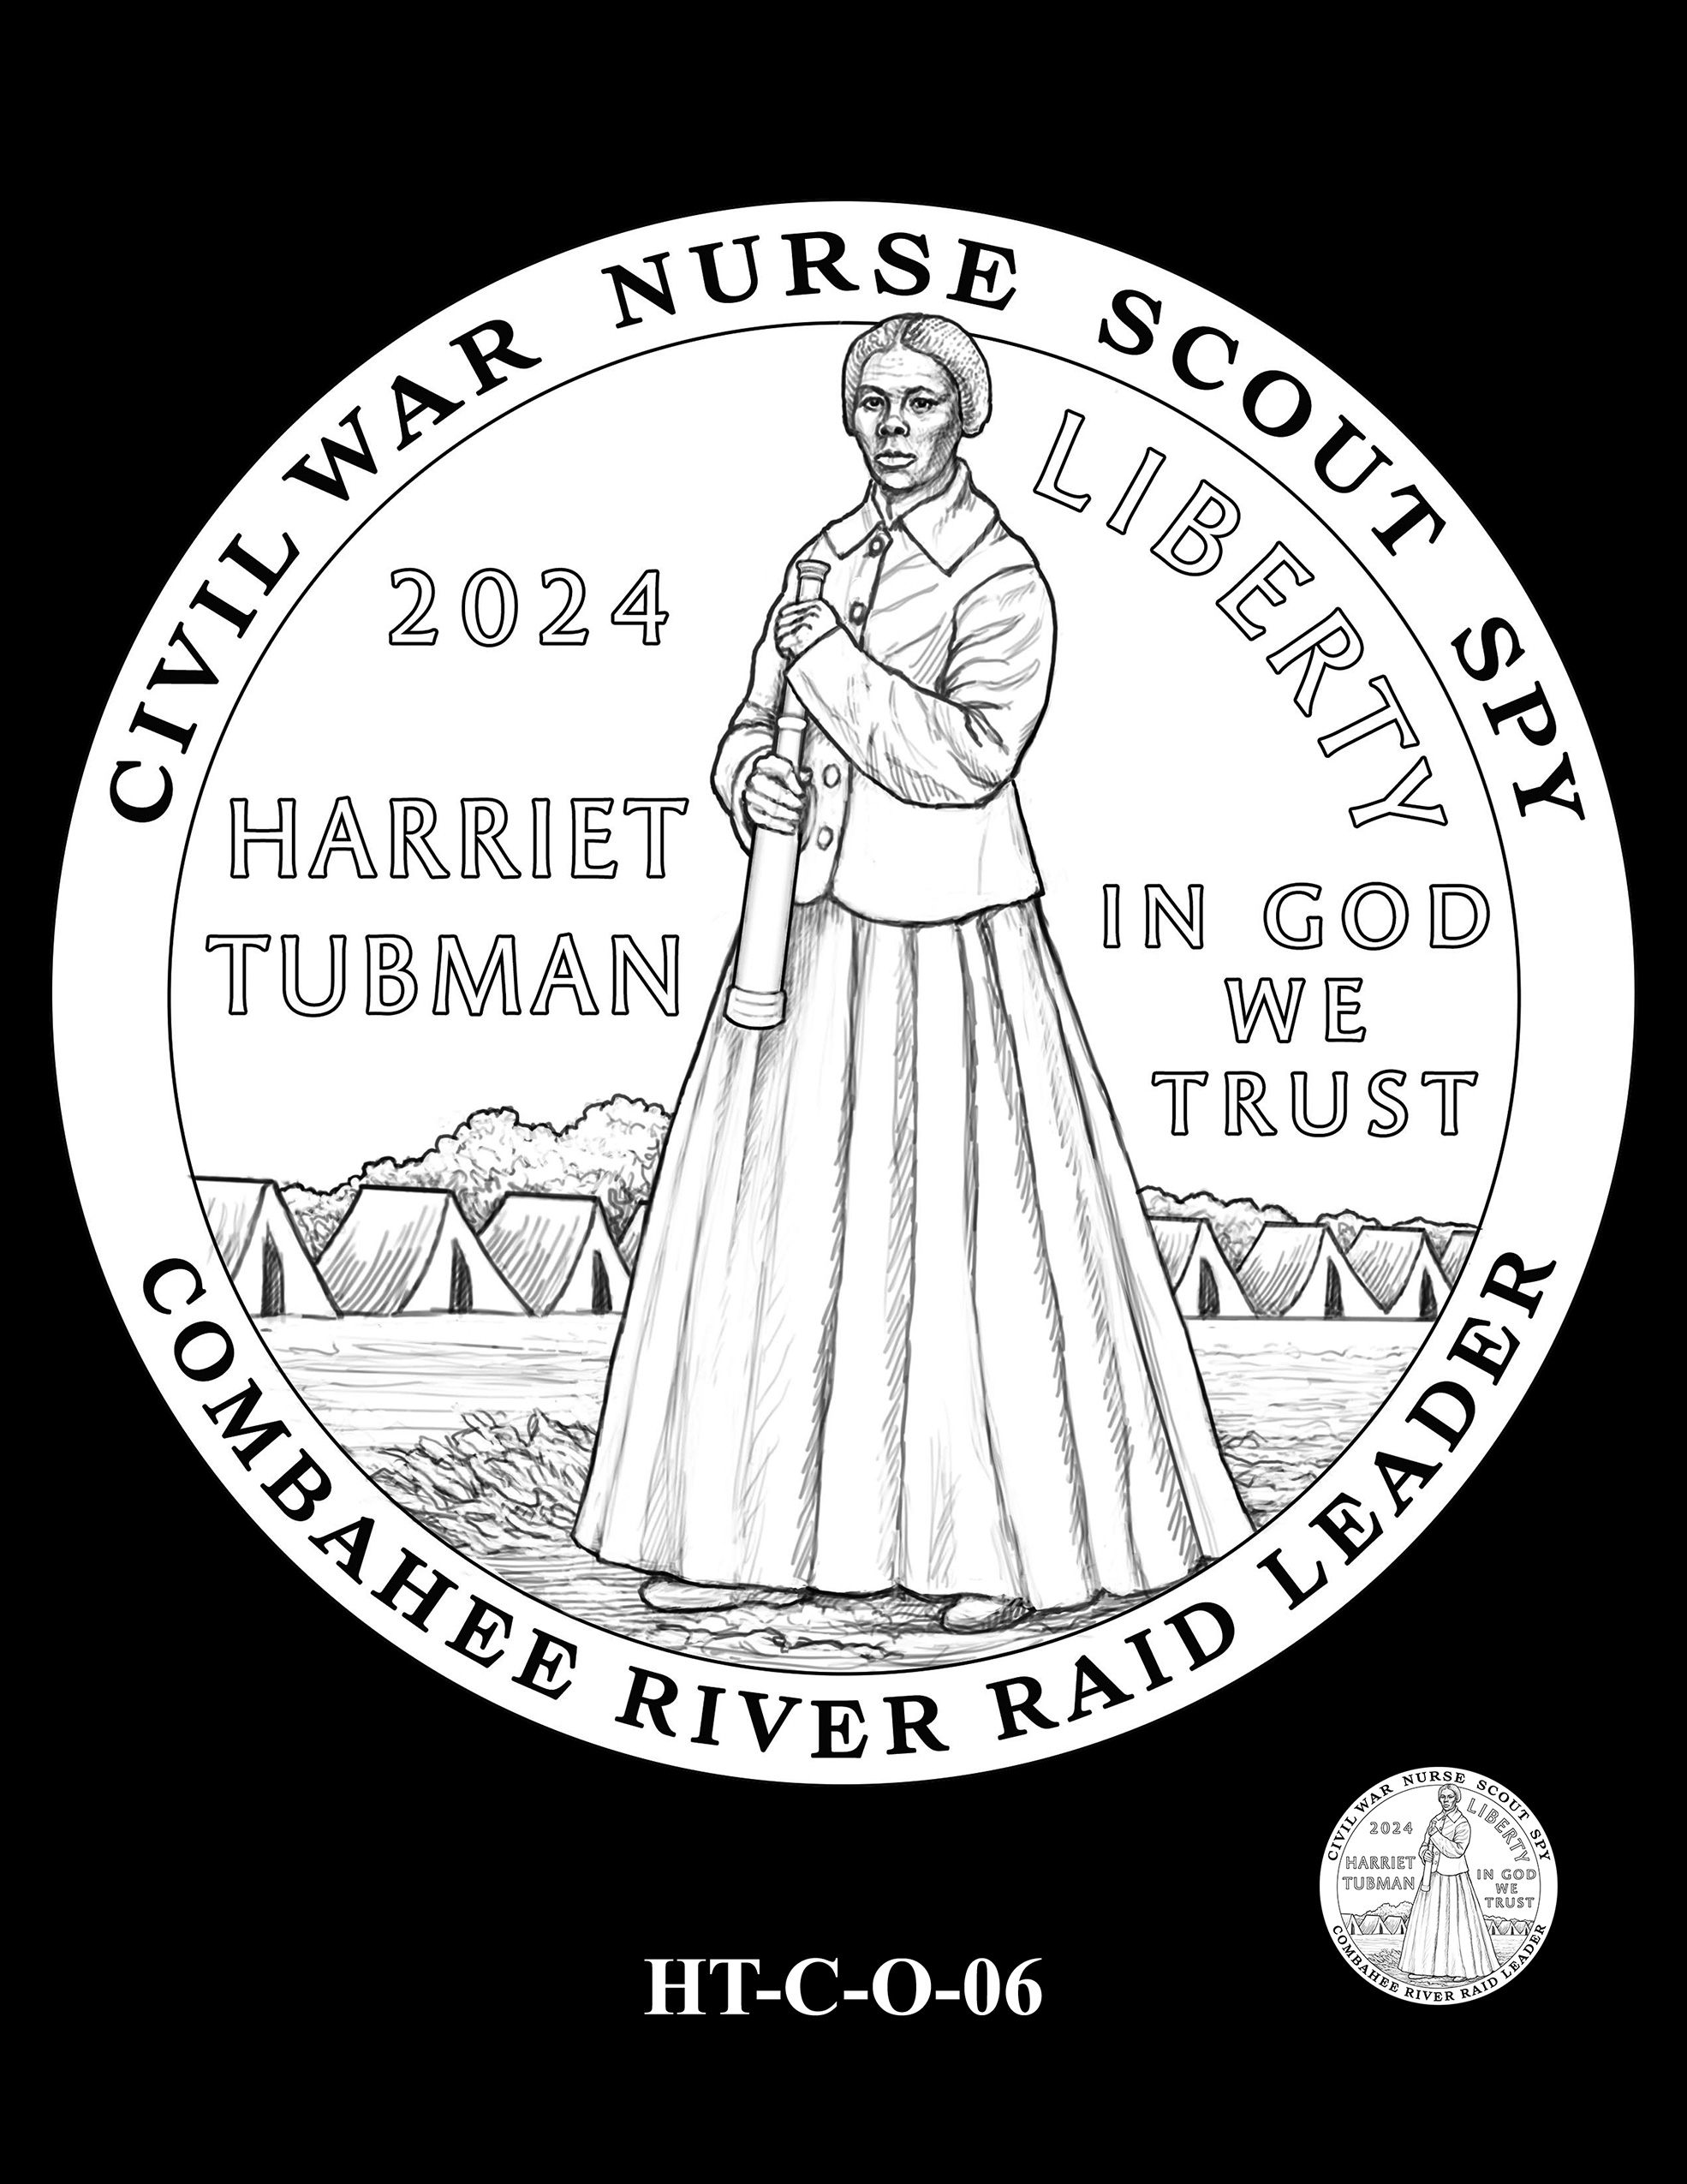 HT-C-O-06 -- Harriet Tubman